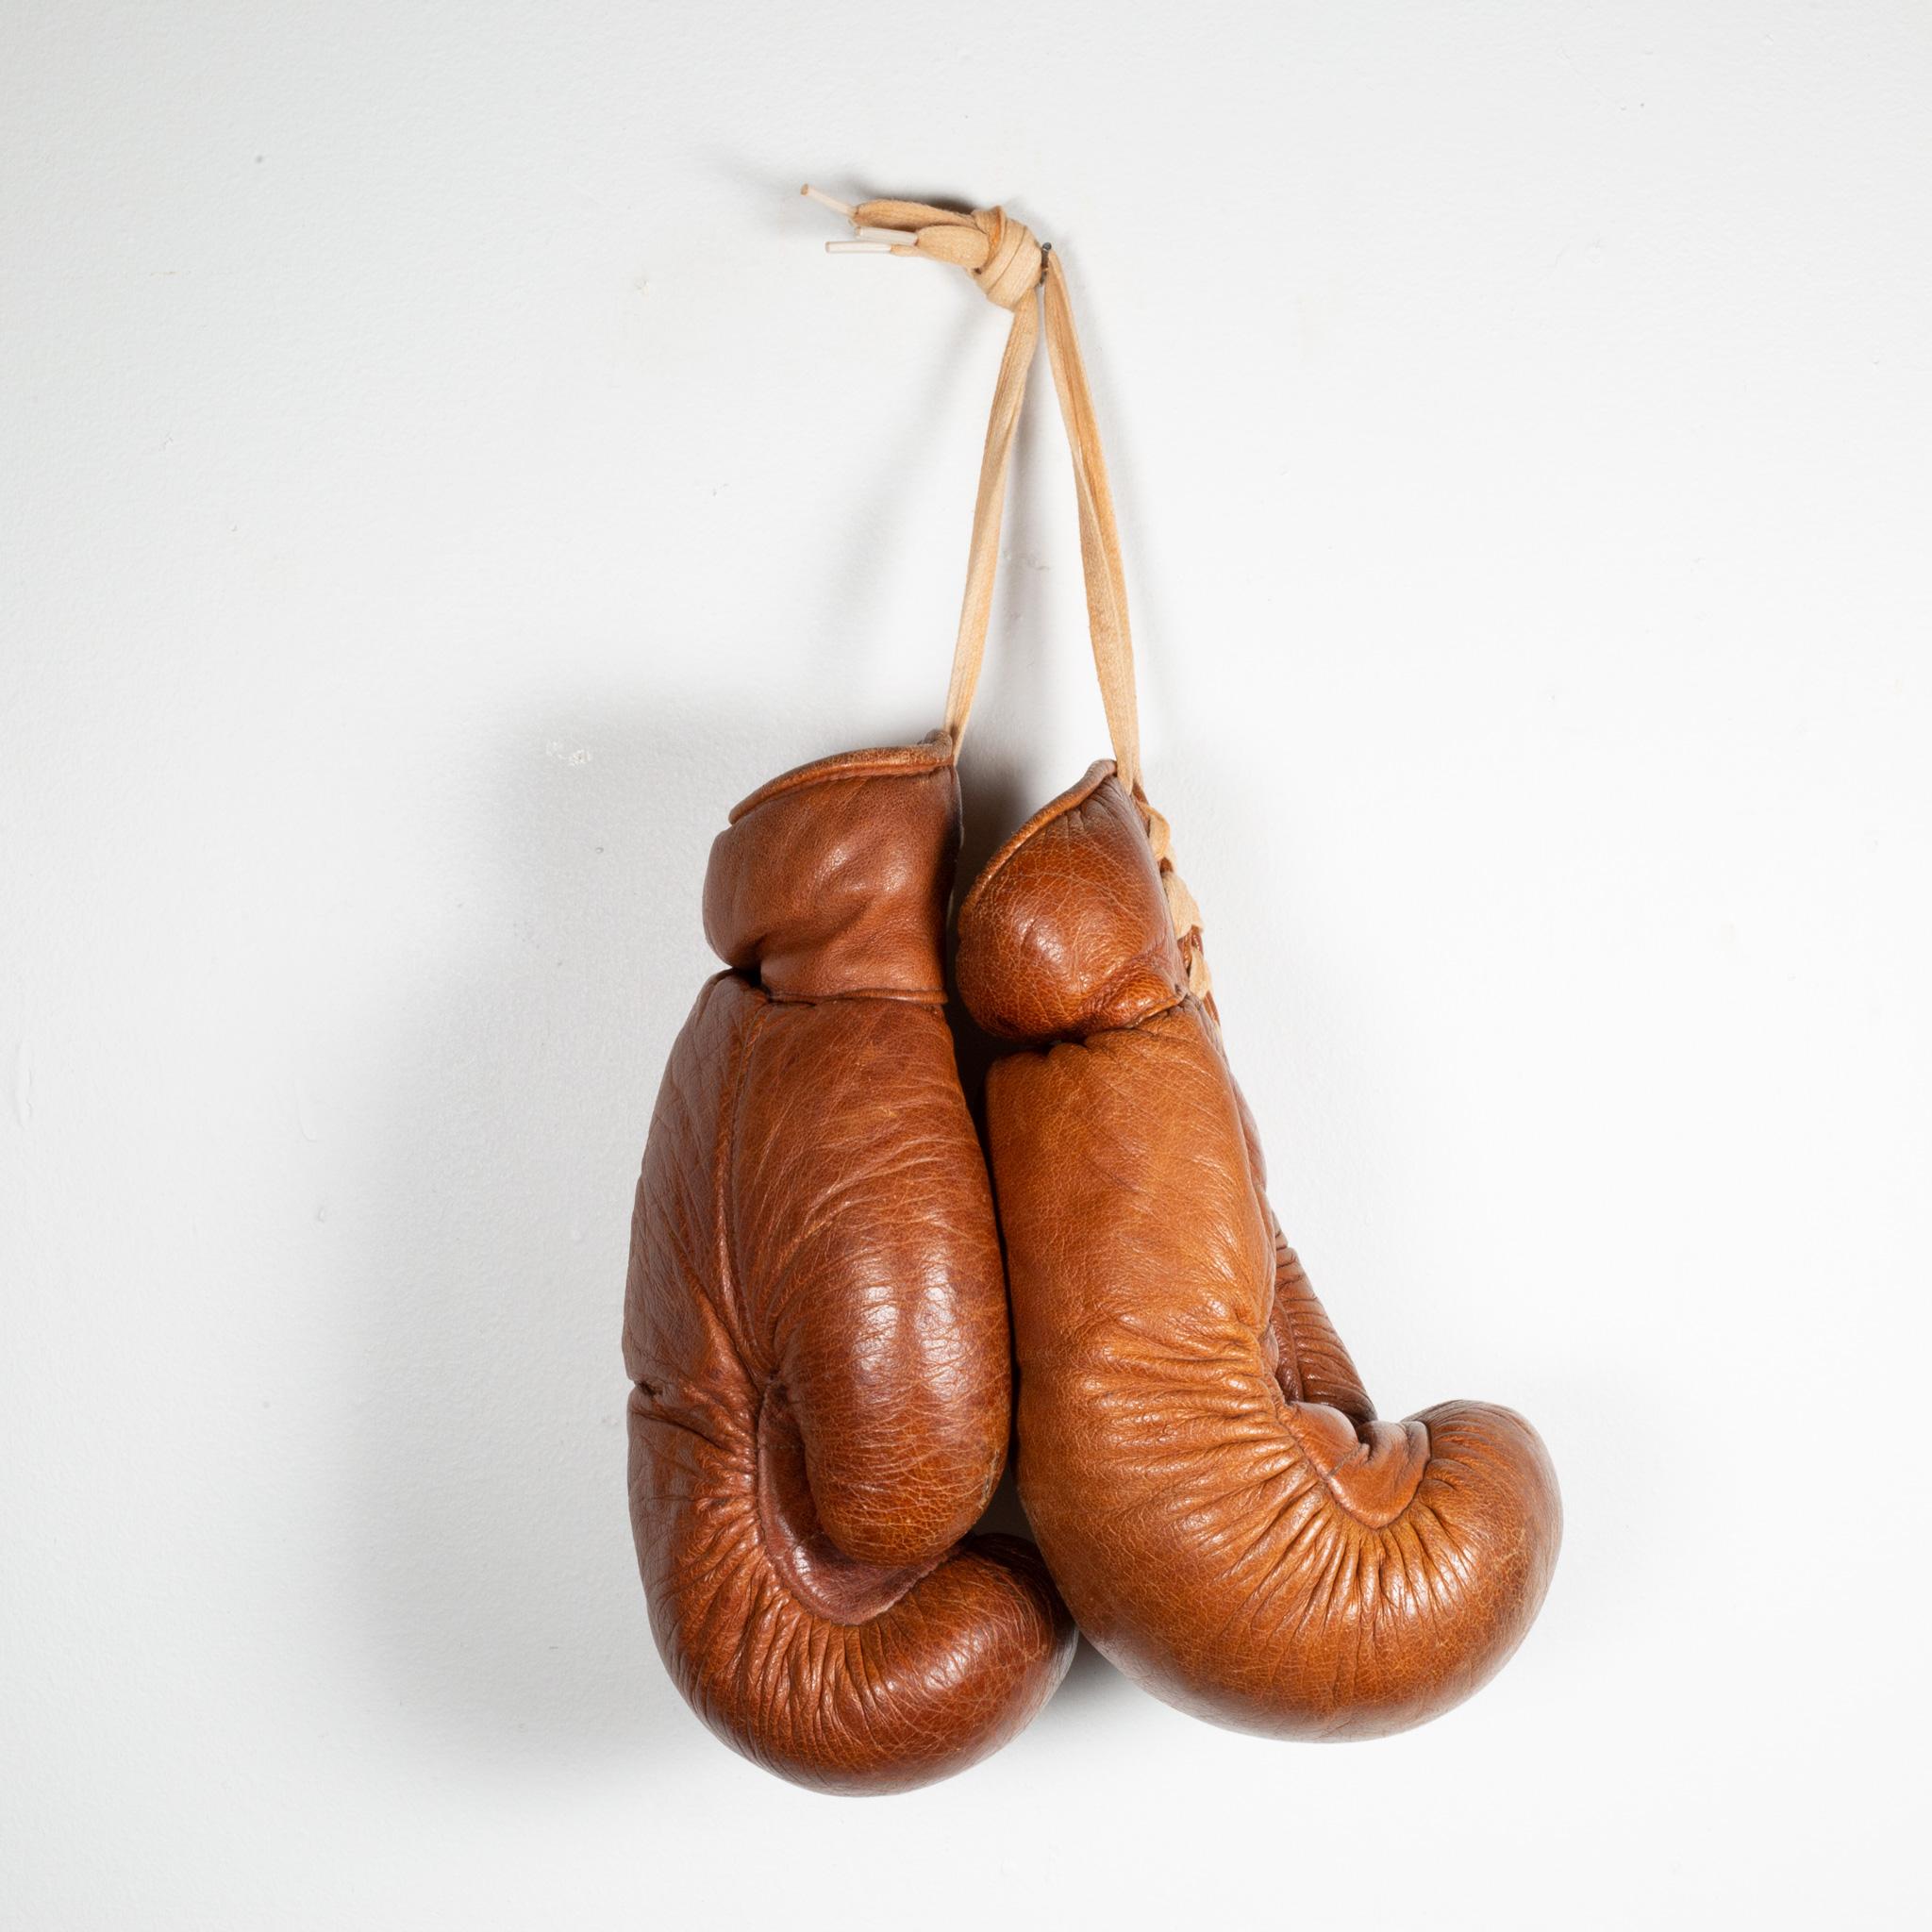 Industrial Vintage German Leather Boxing Gloves, C.1950